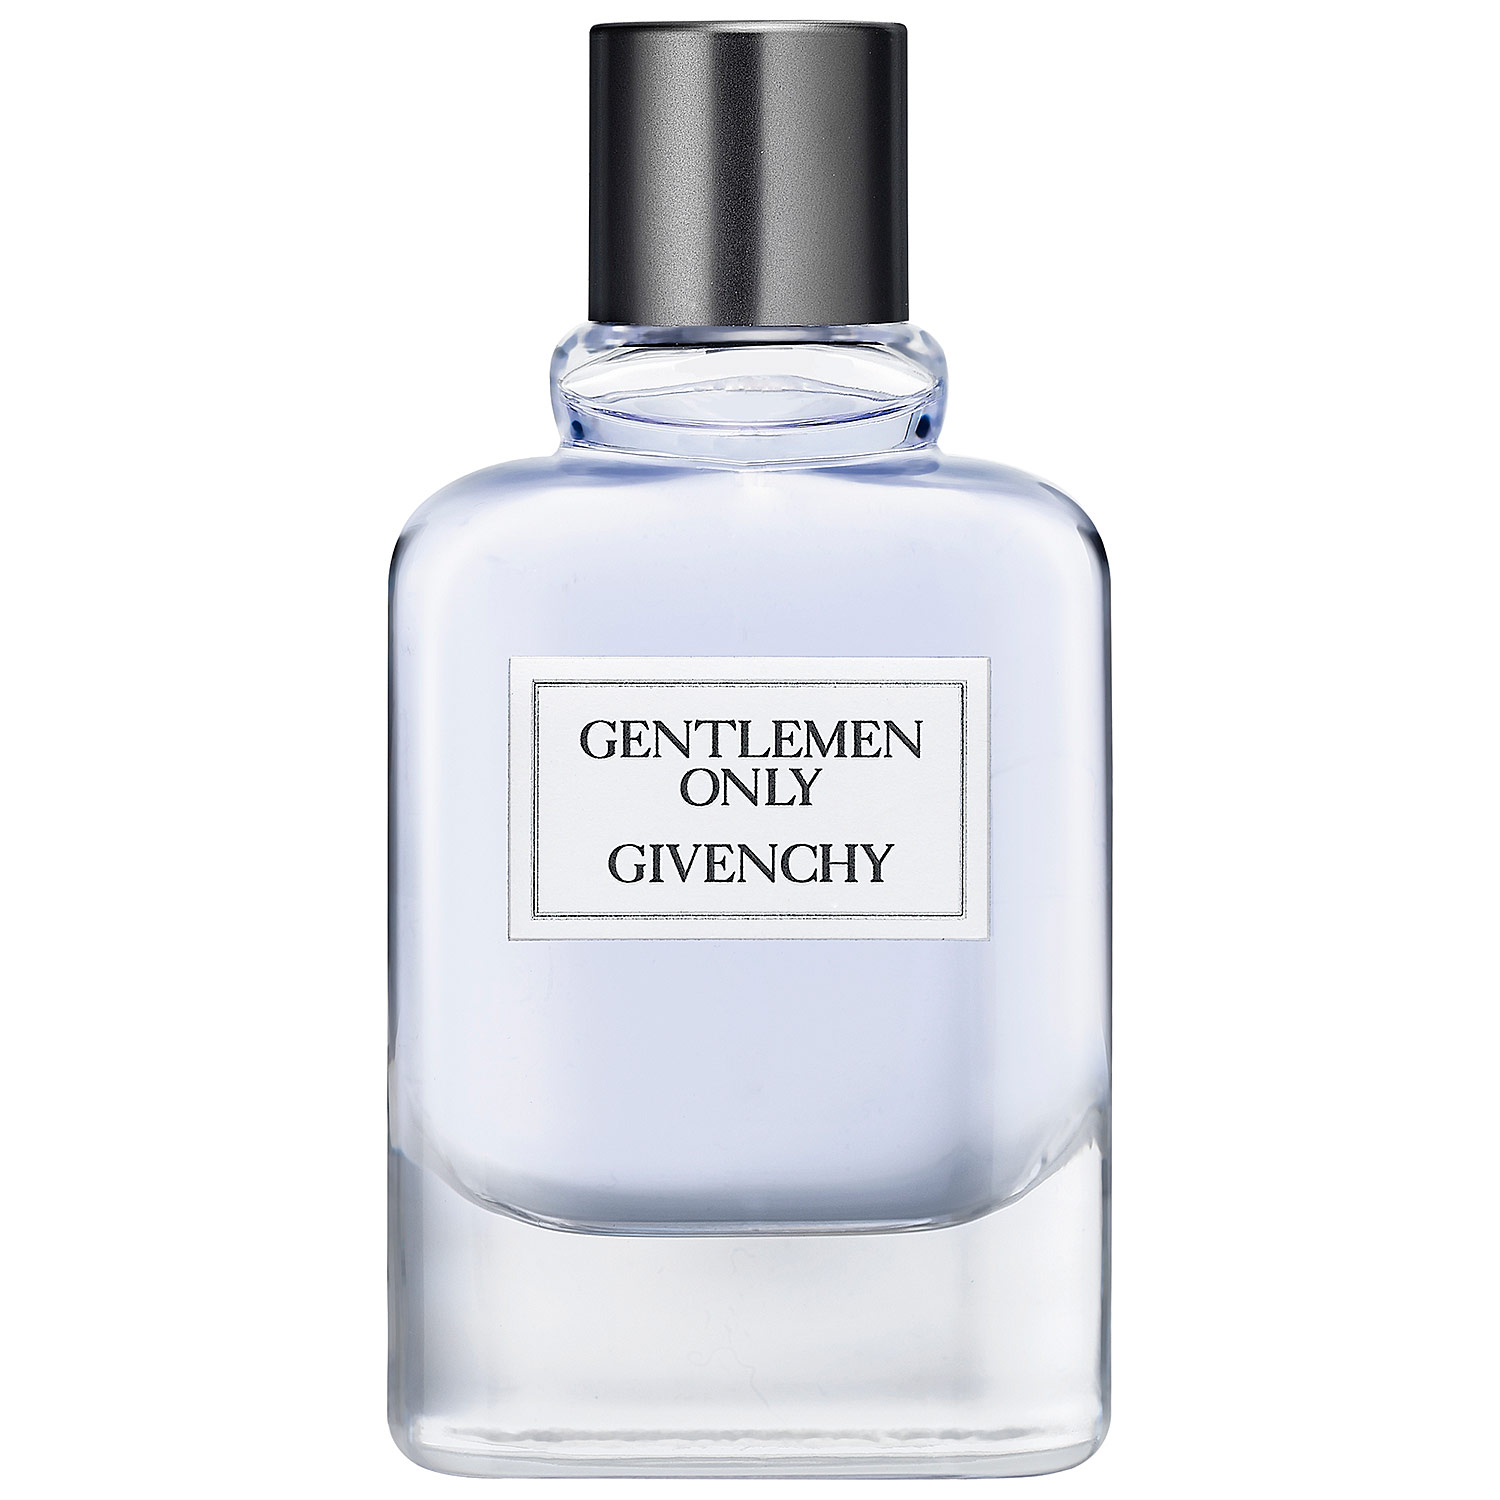 Живанши мужские летуаль. Givenchy Gentlemen only 100 ml. Givenchy Gentleman EDT 50ml. Givenchy Gentlemen only Eau de Toilette. Givenchy Gentlemen only EDT (100 мл, тестер).